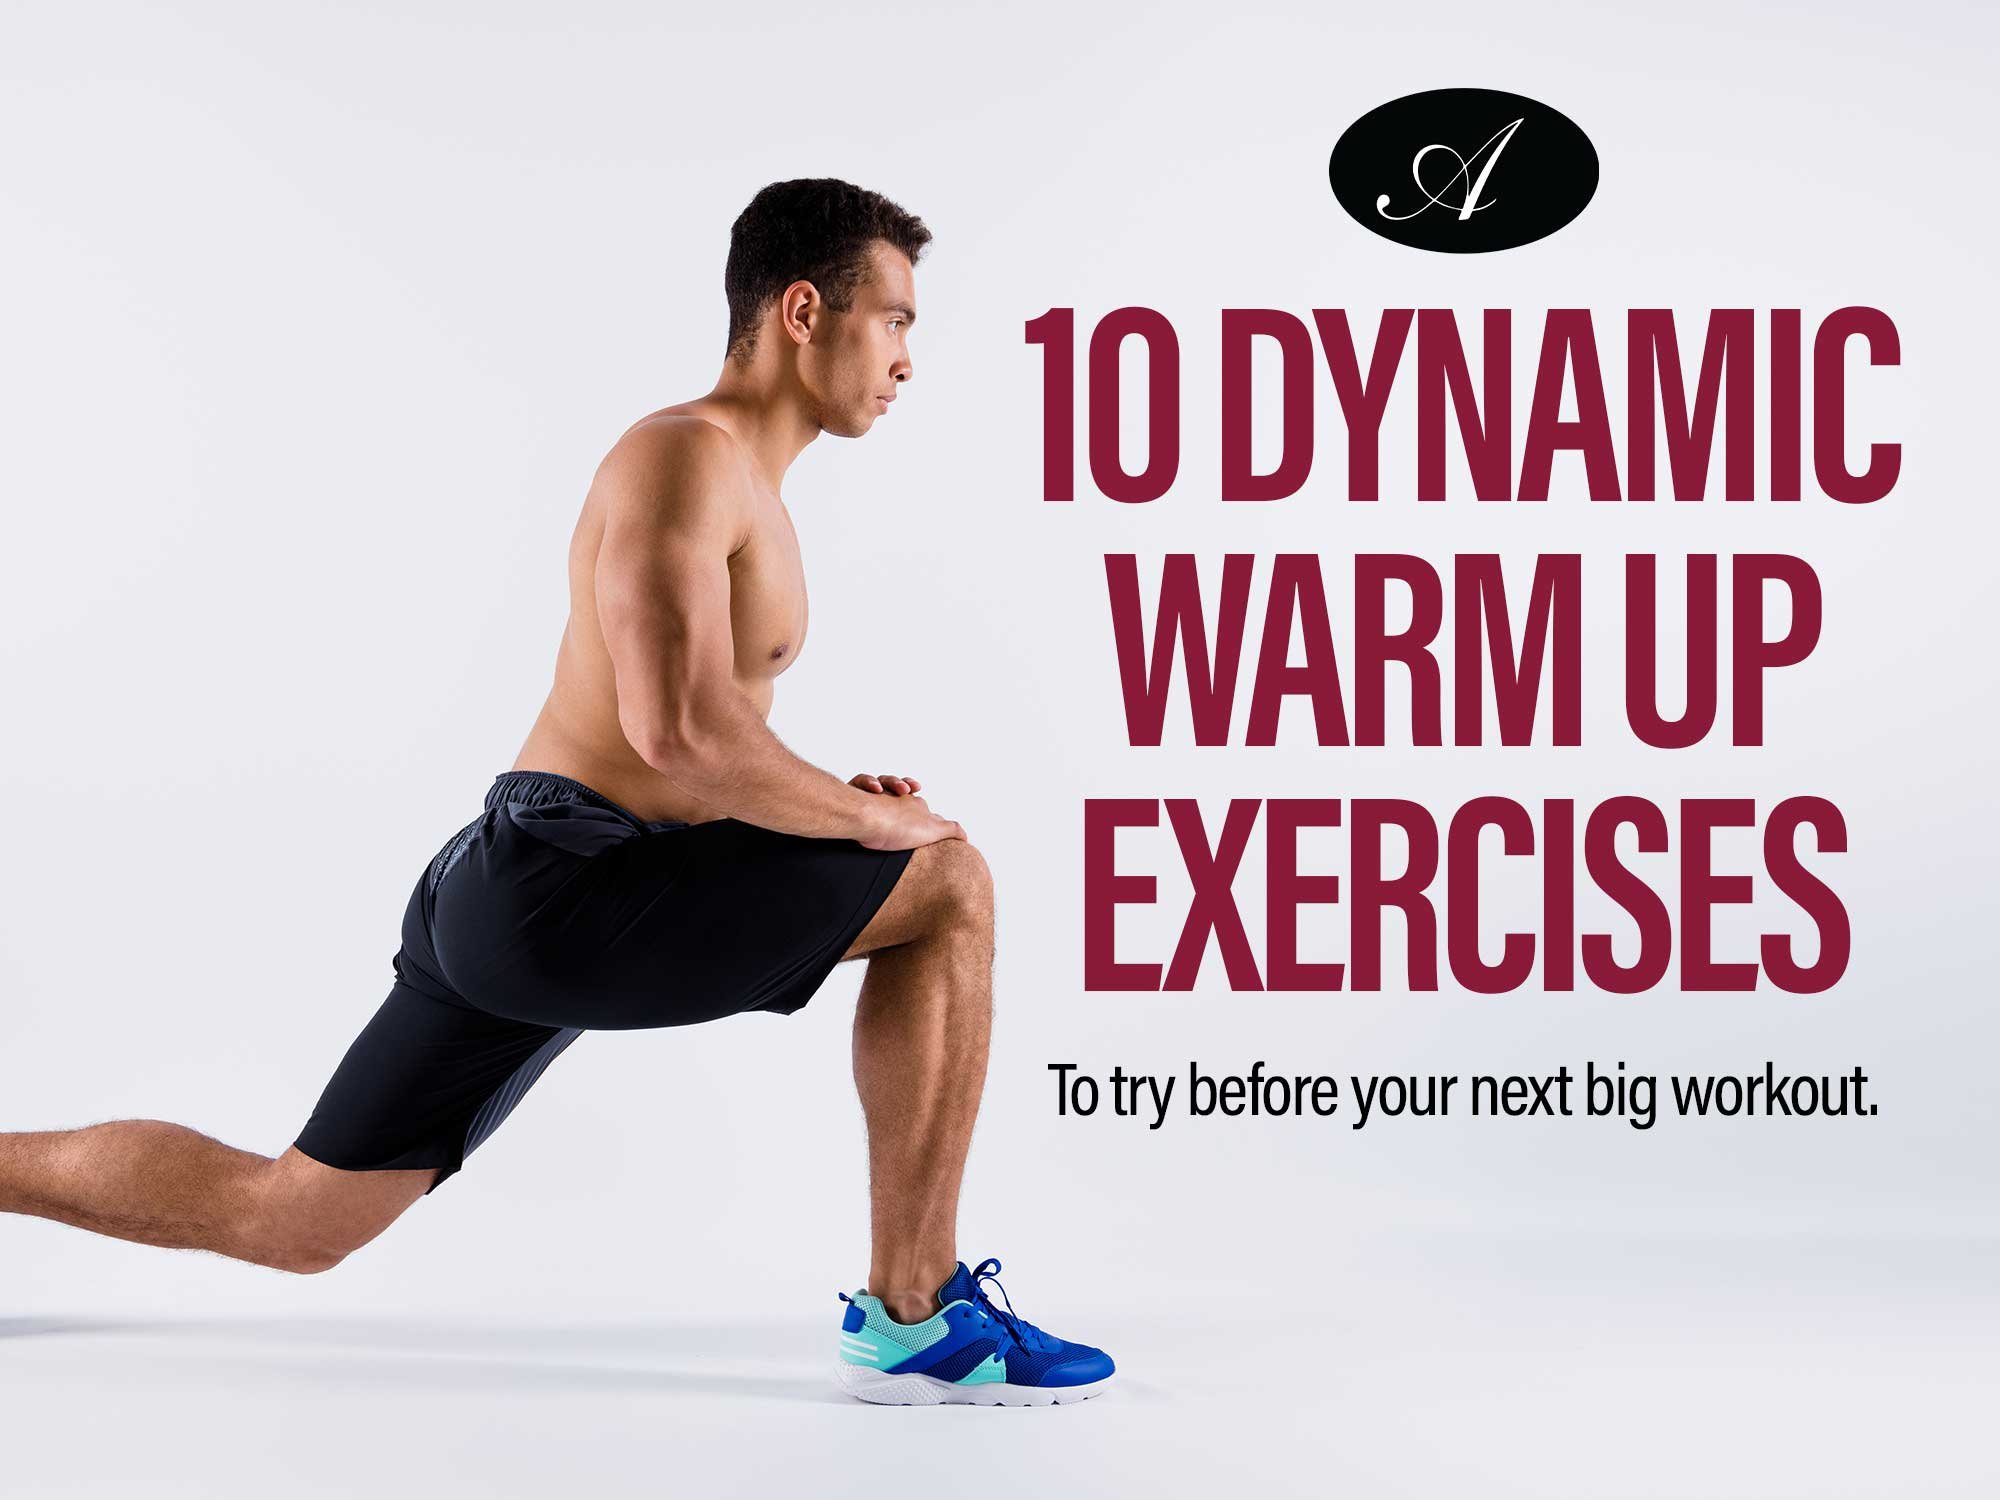 II. Benefits of Dynamic Warm-up Exercises